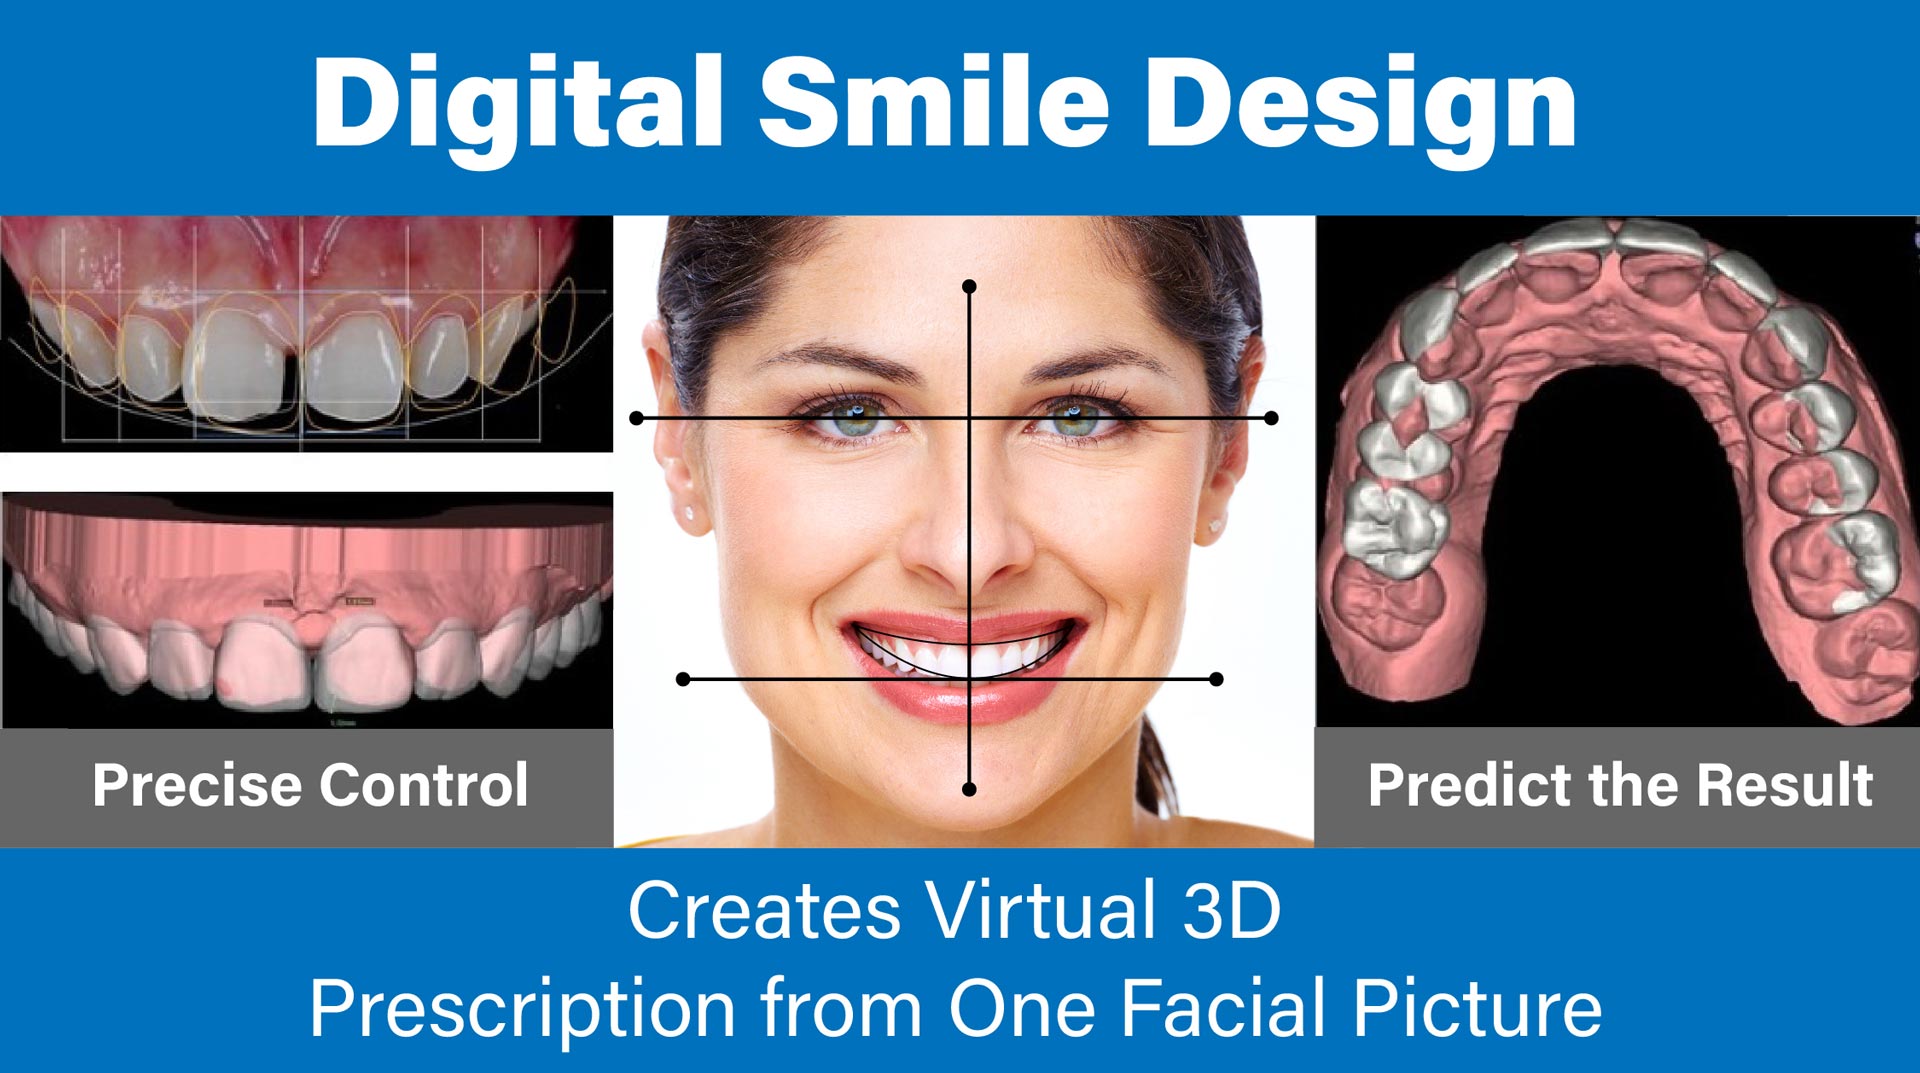 Digital Smile Design via creating Virtual 3D Prescription from on facial picture